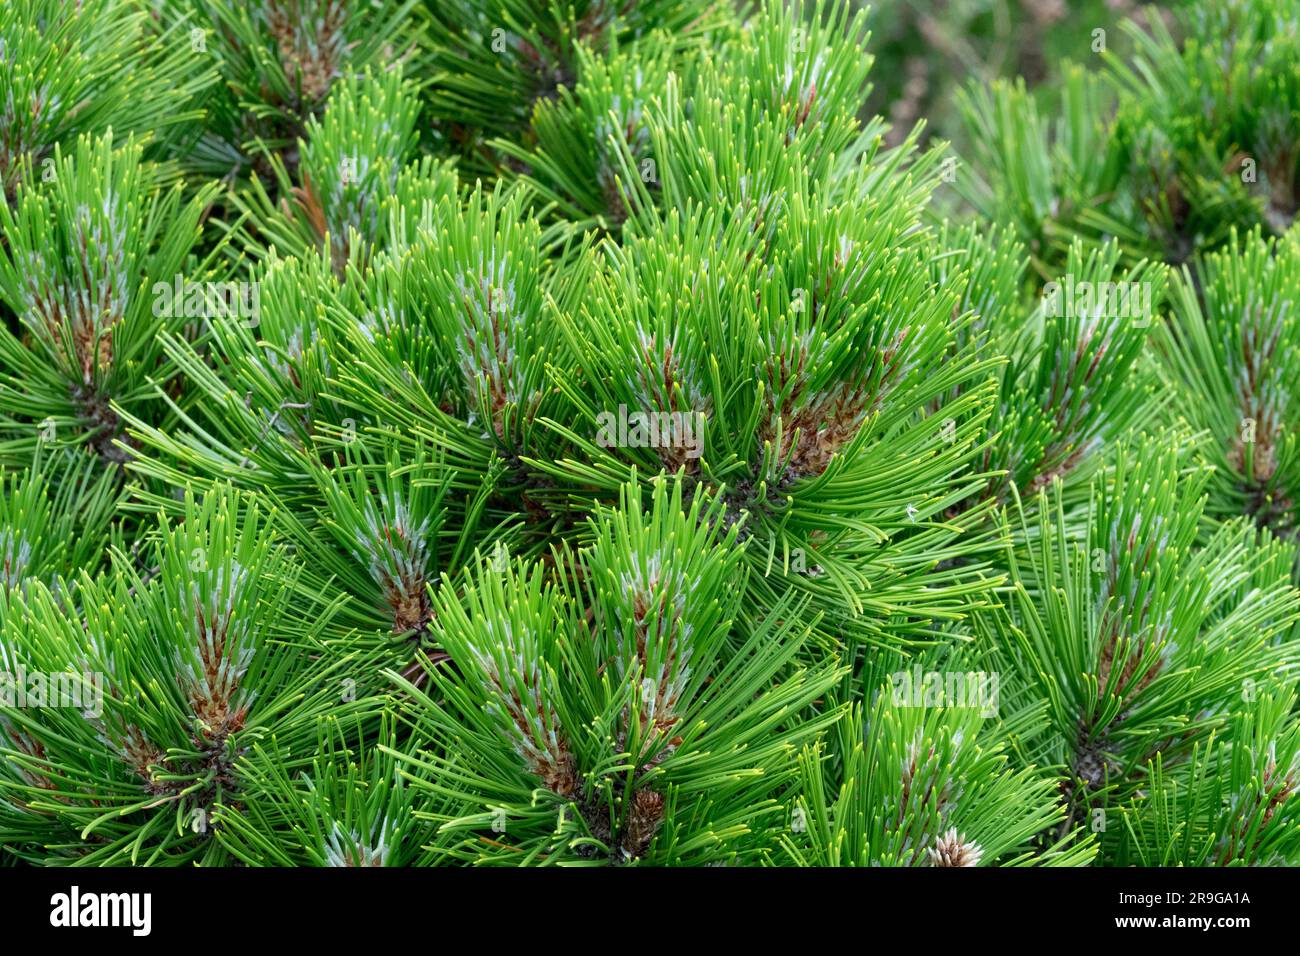 Bosnian Pine, Pinus heldreichii 'Smidtii' needles closeup Stock Photo